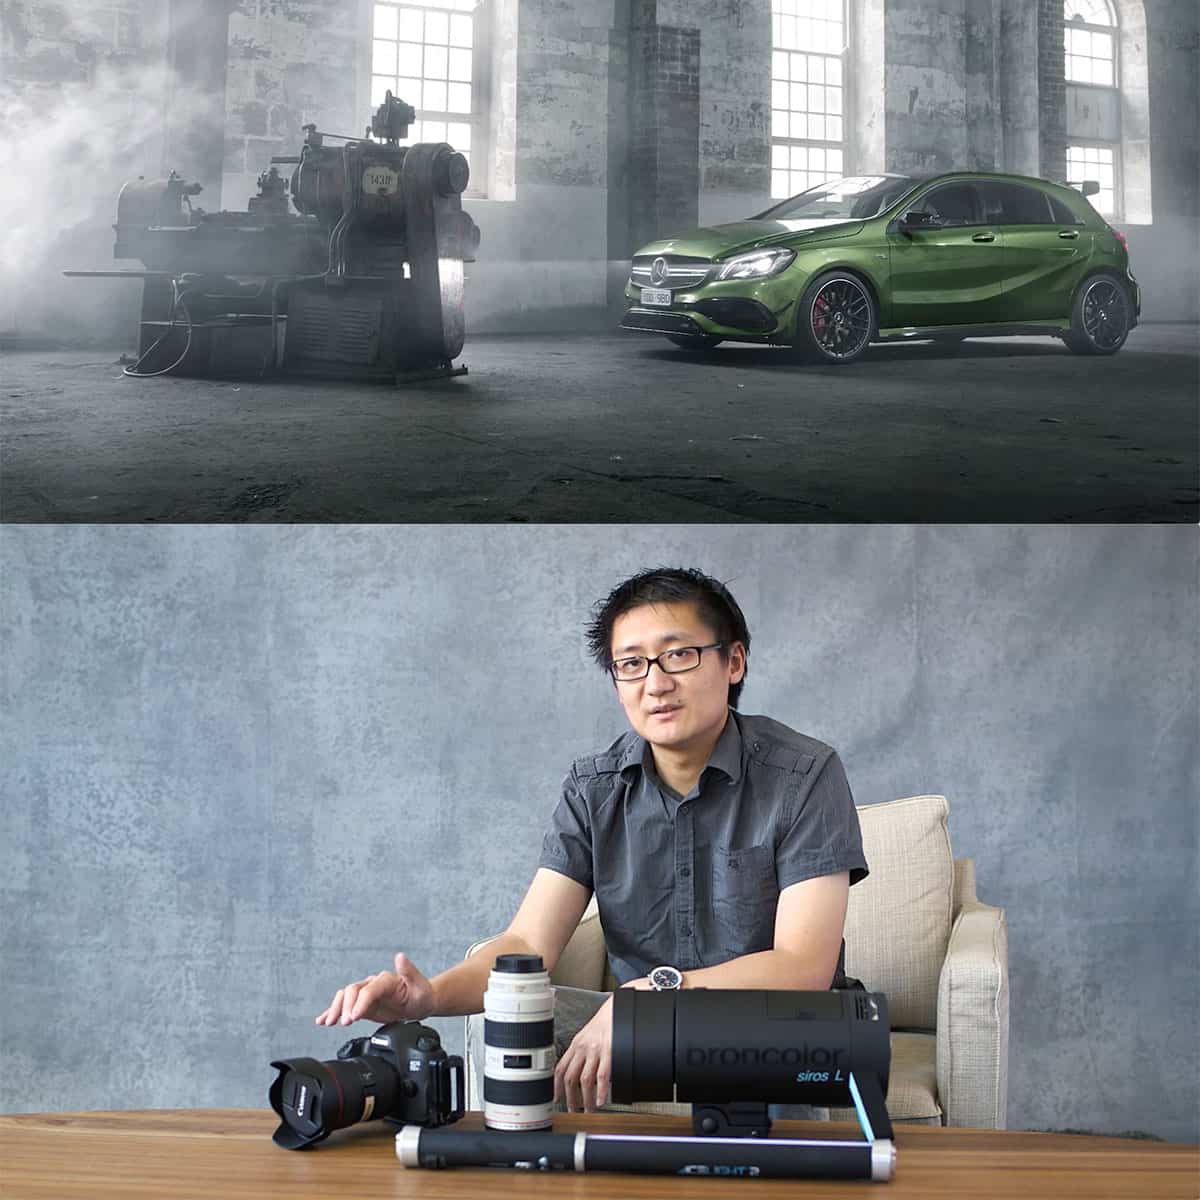 Commercial Car Photography Retouching Course - PRO EDU Easton Chang PRO EDU